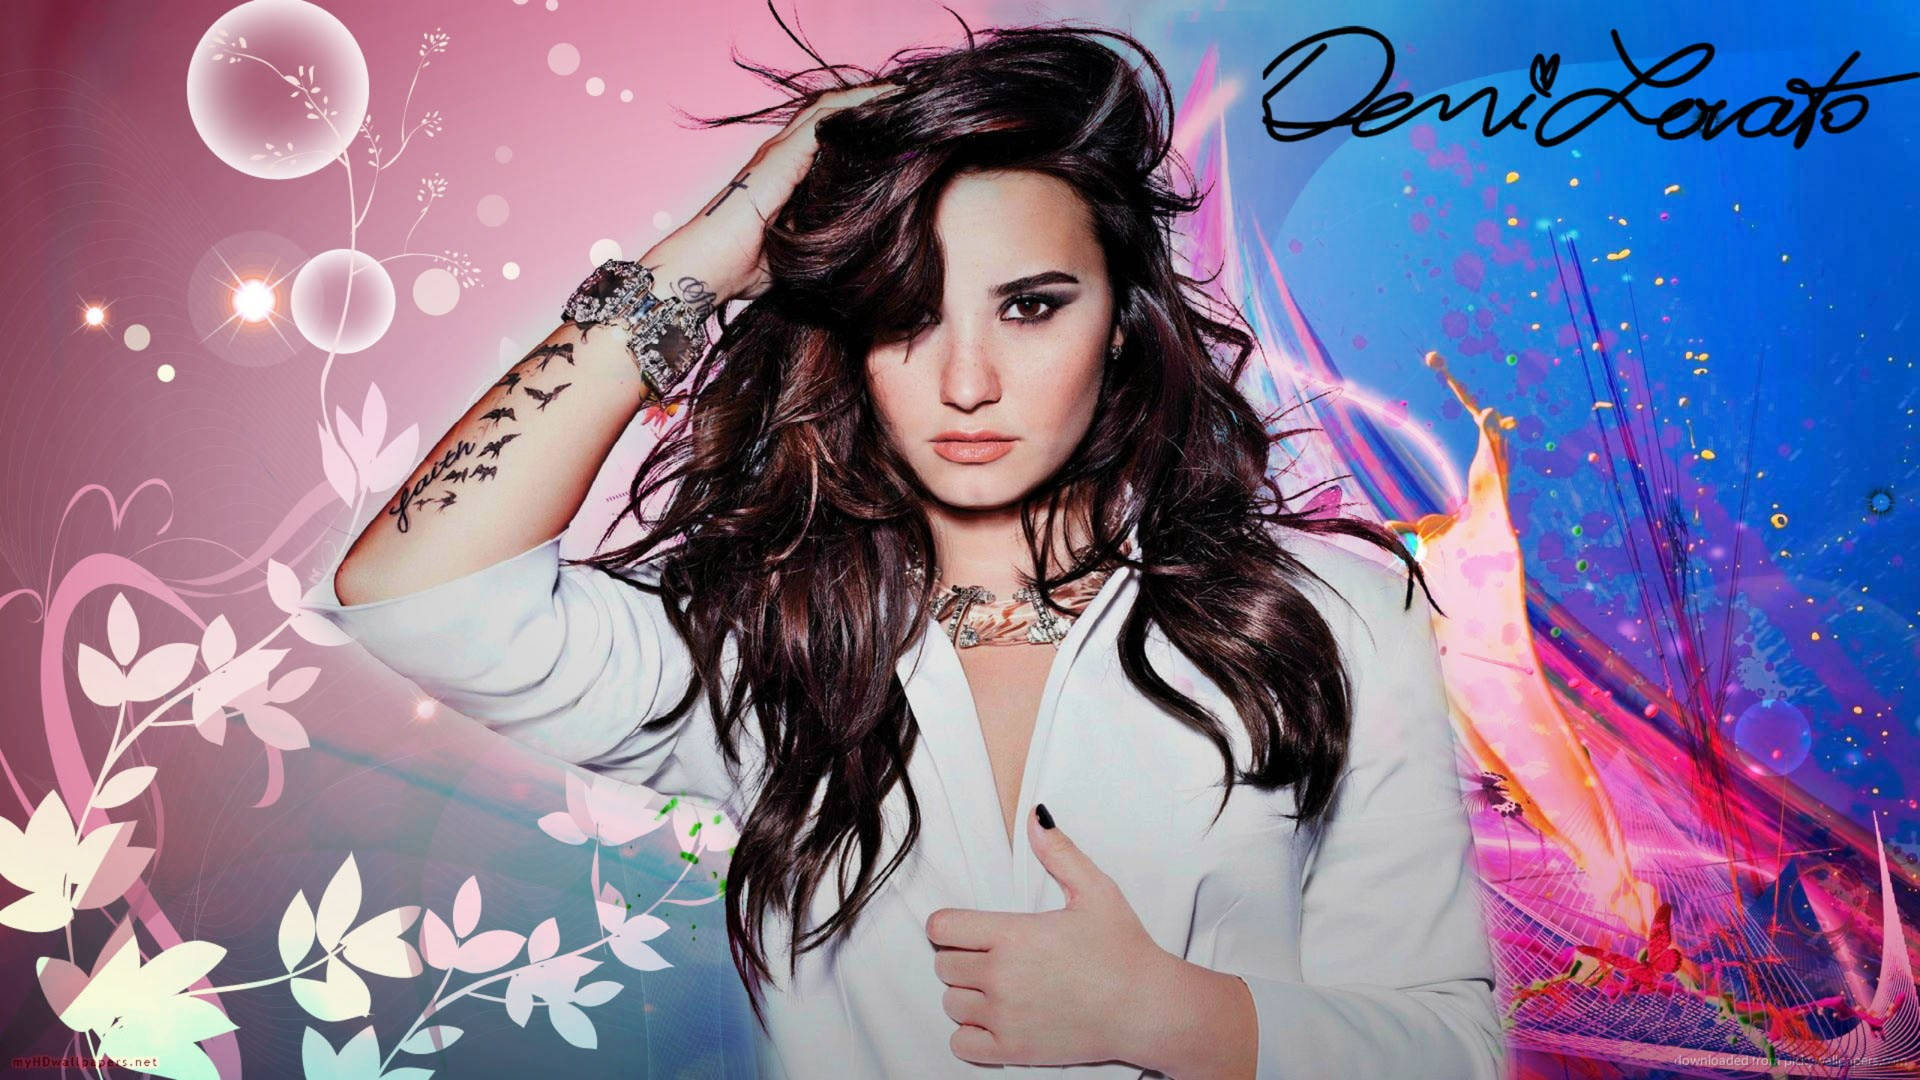 Demi Lovato Digital Art Background